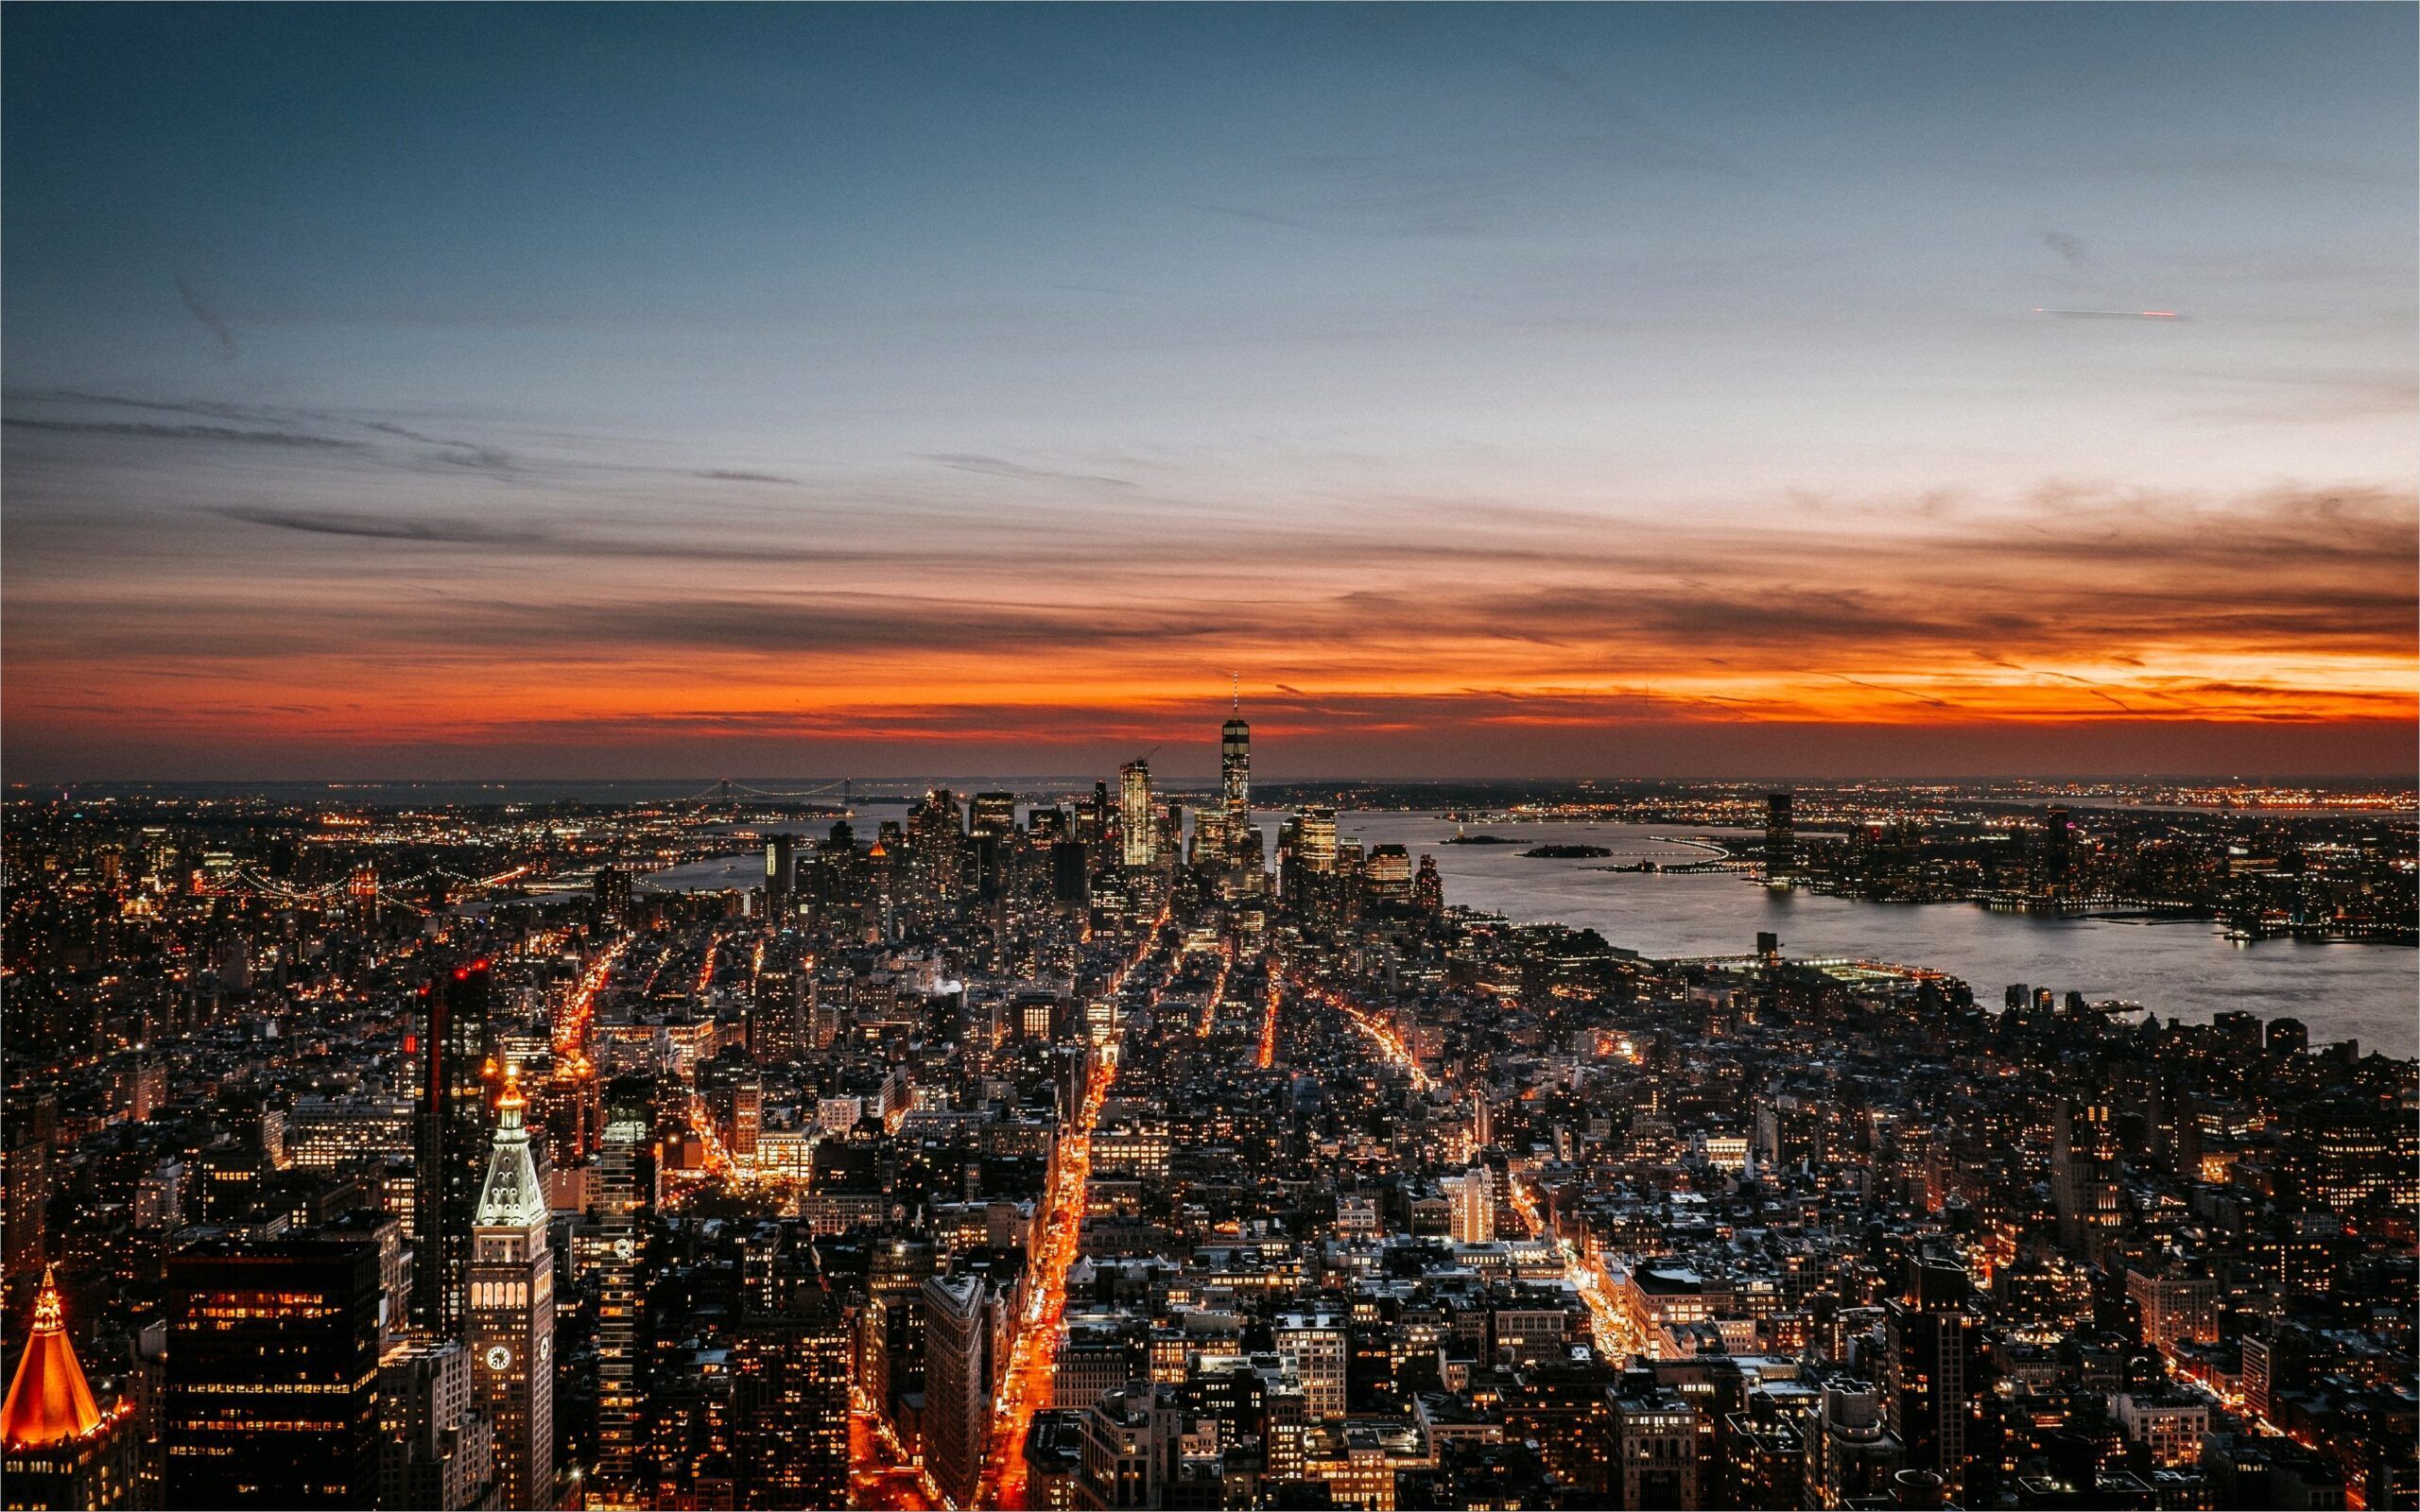 4k Wallpaper City Skyline. New york wallpaper, New york city image, Night city